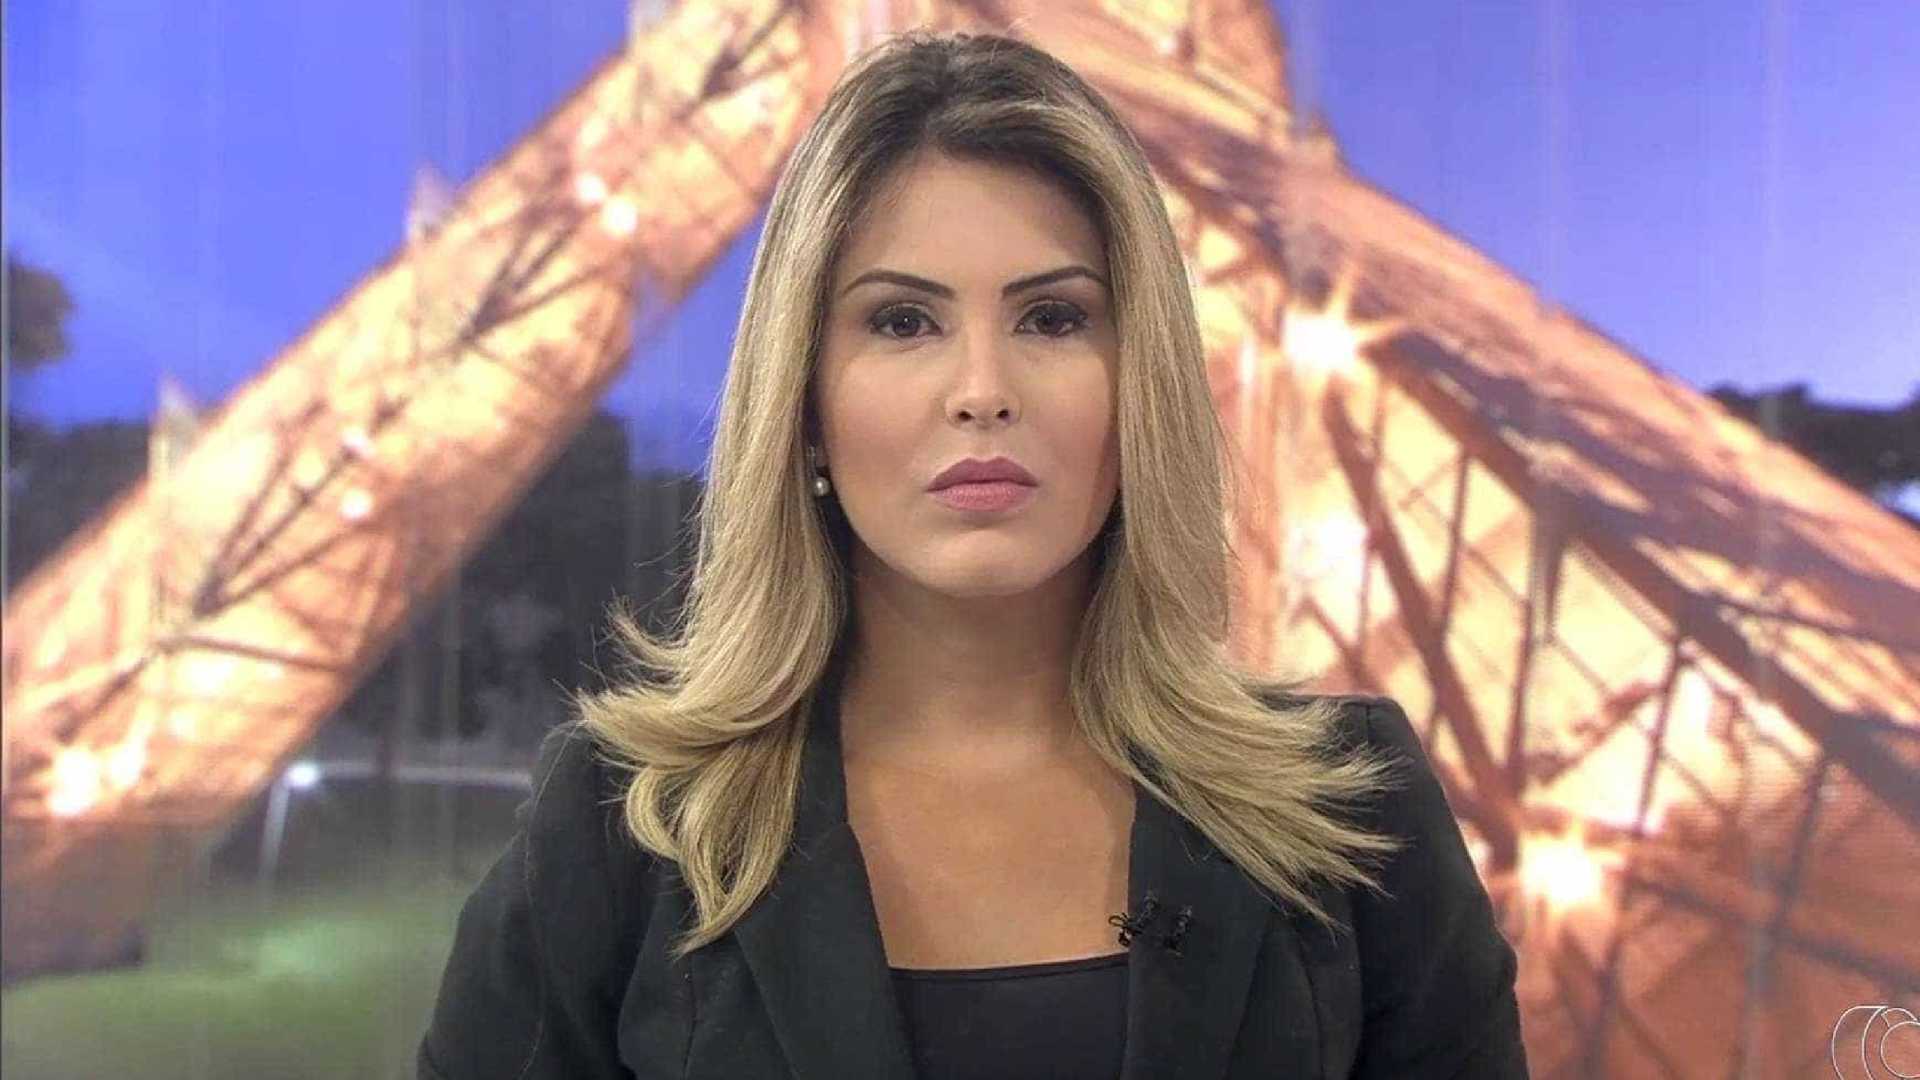 Mariana Martins